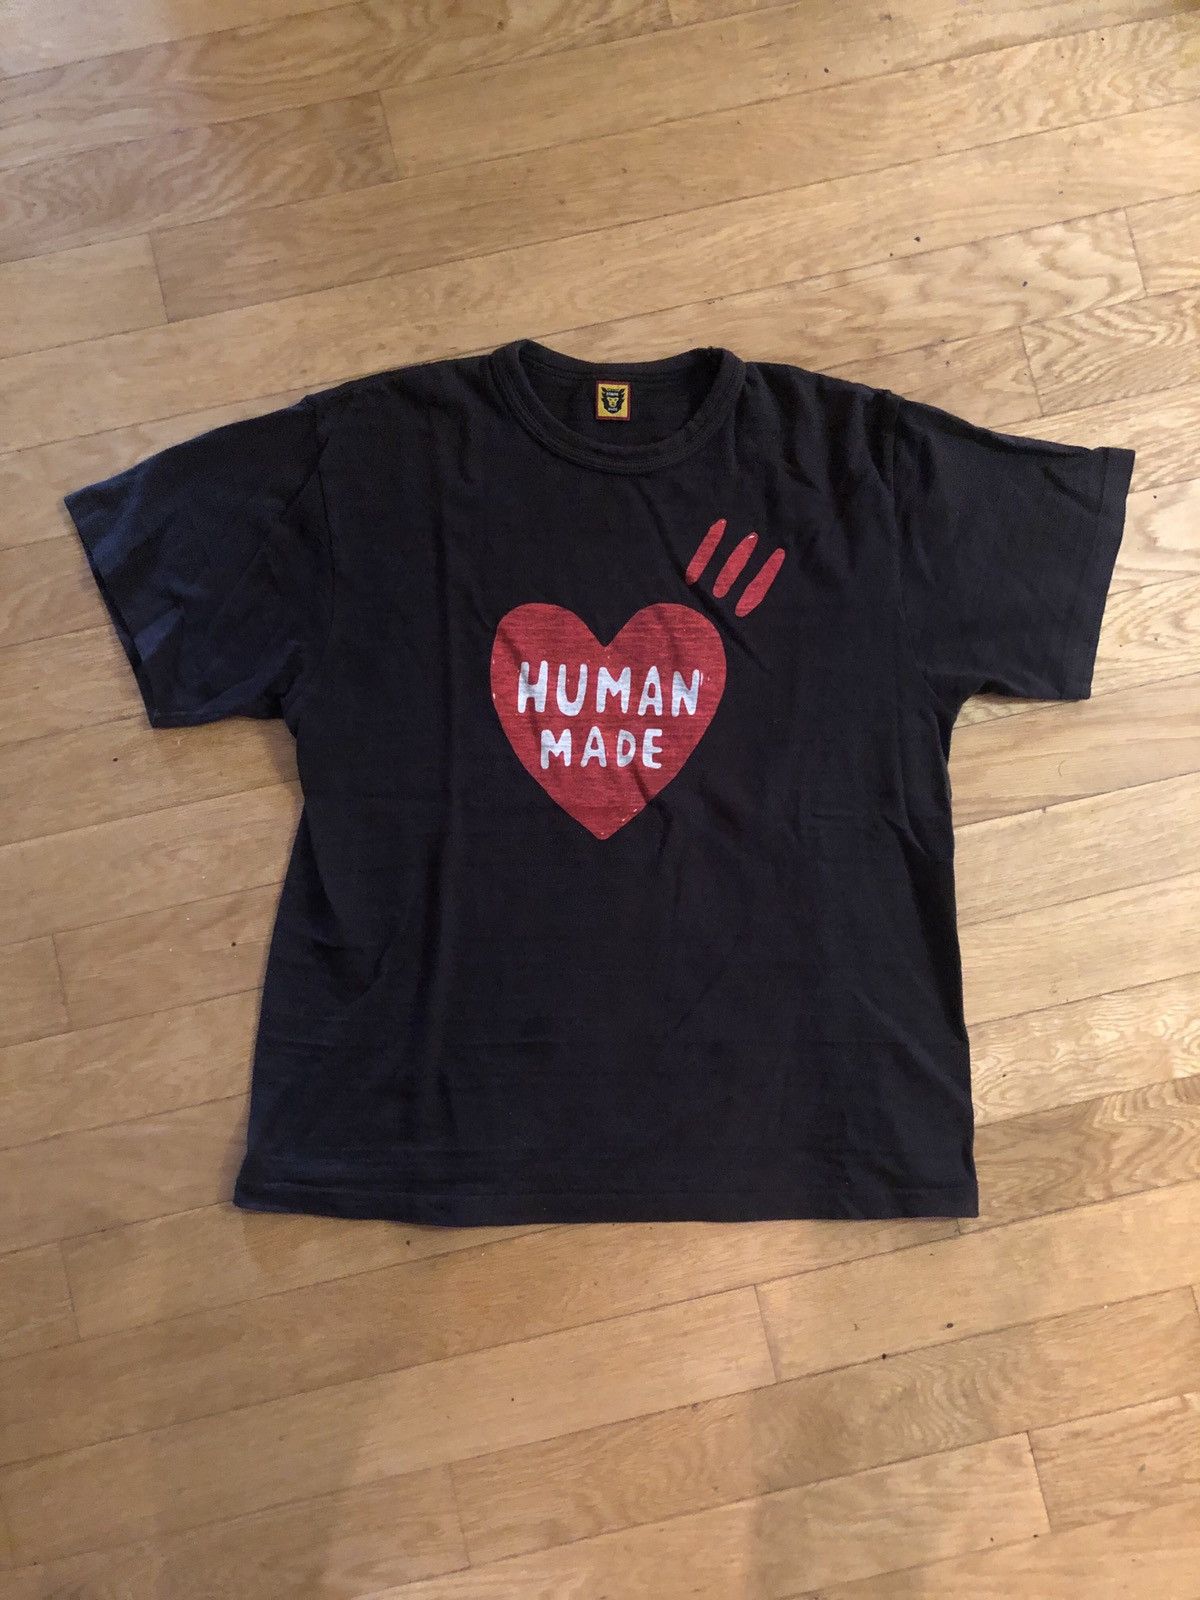 Human Made Human Made heart logo tee shirt | Grailed